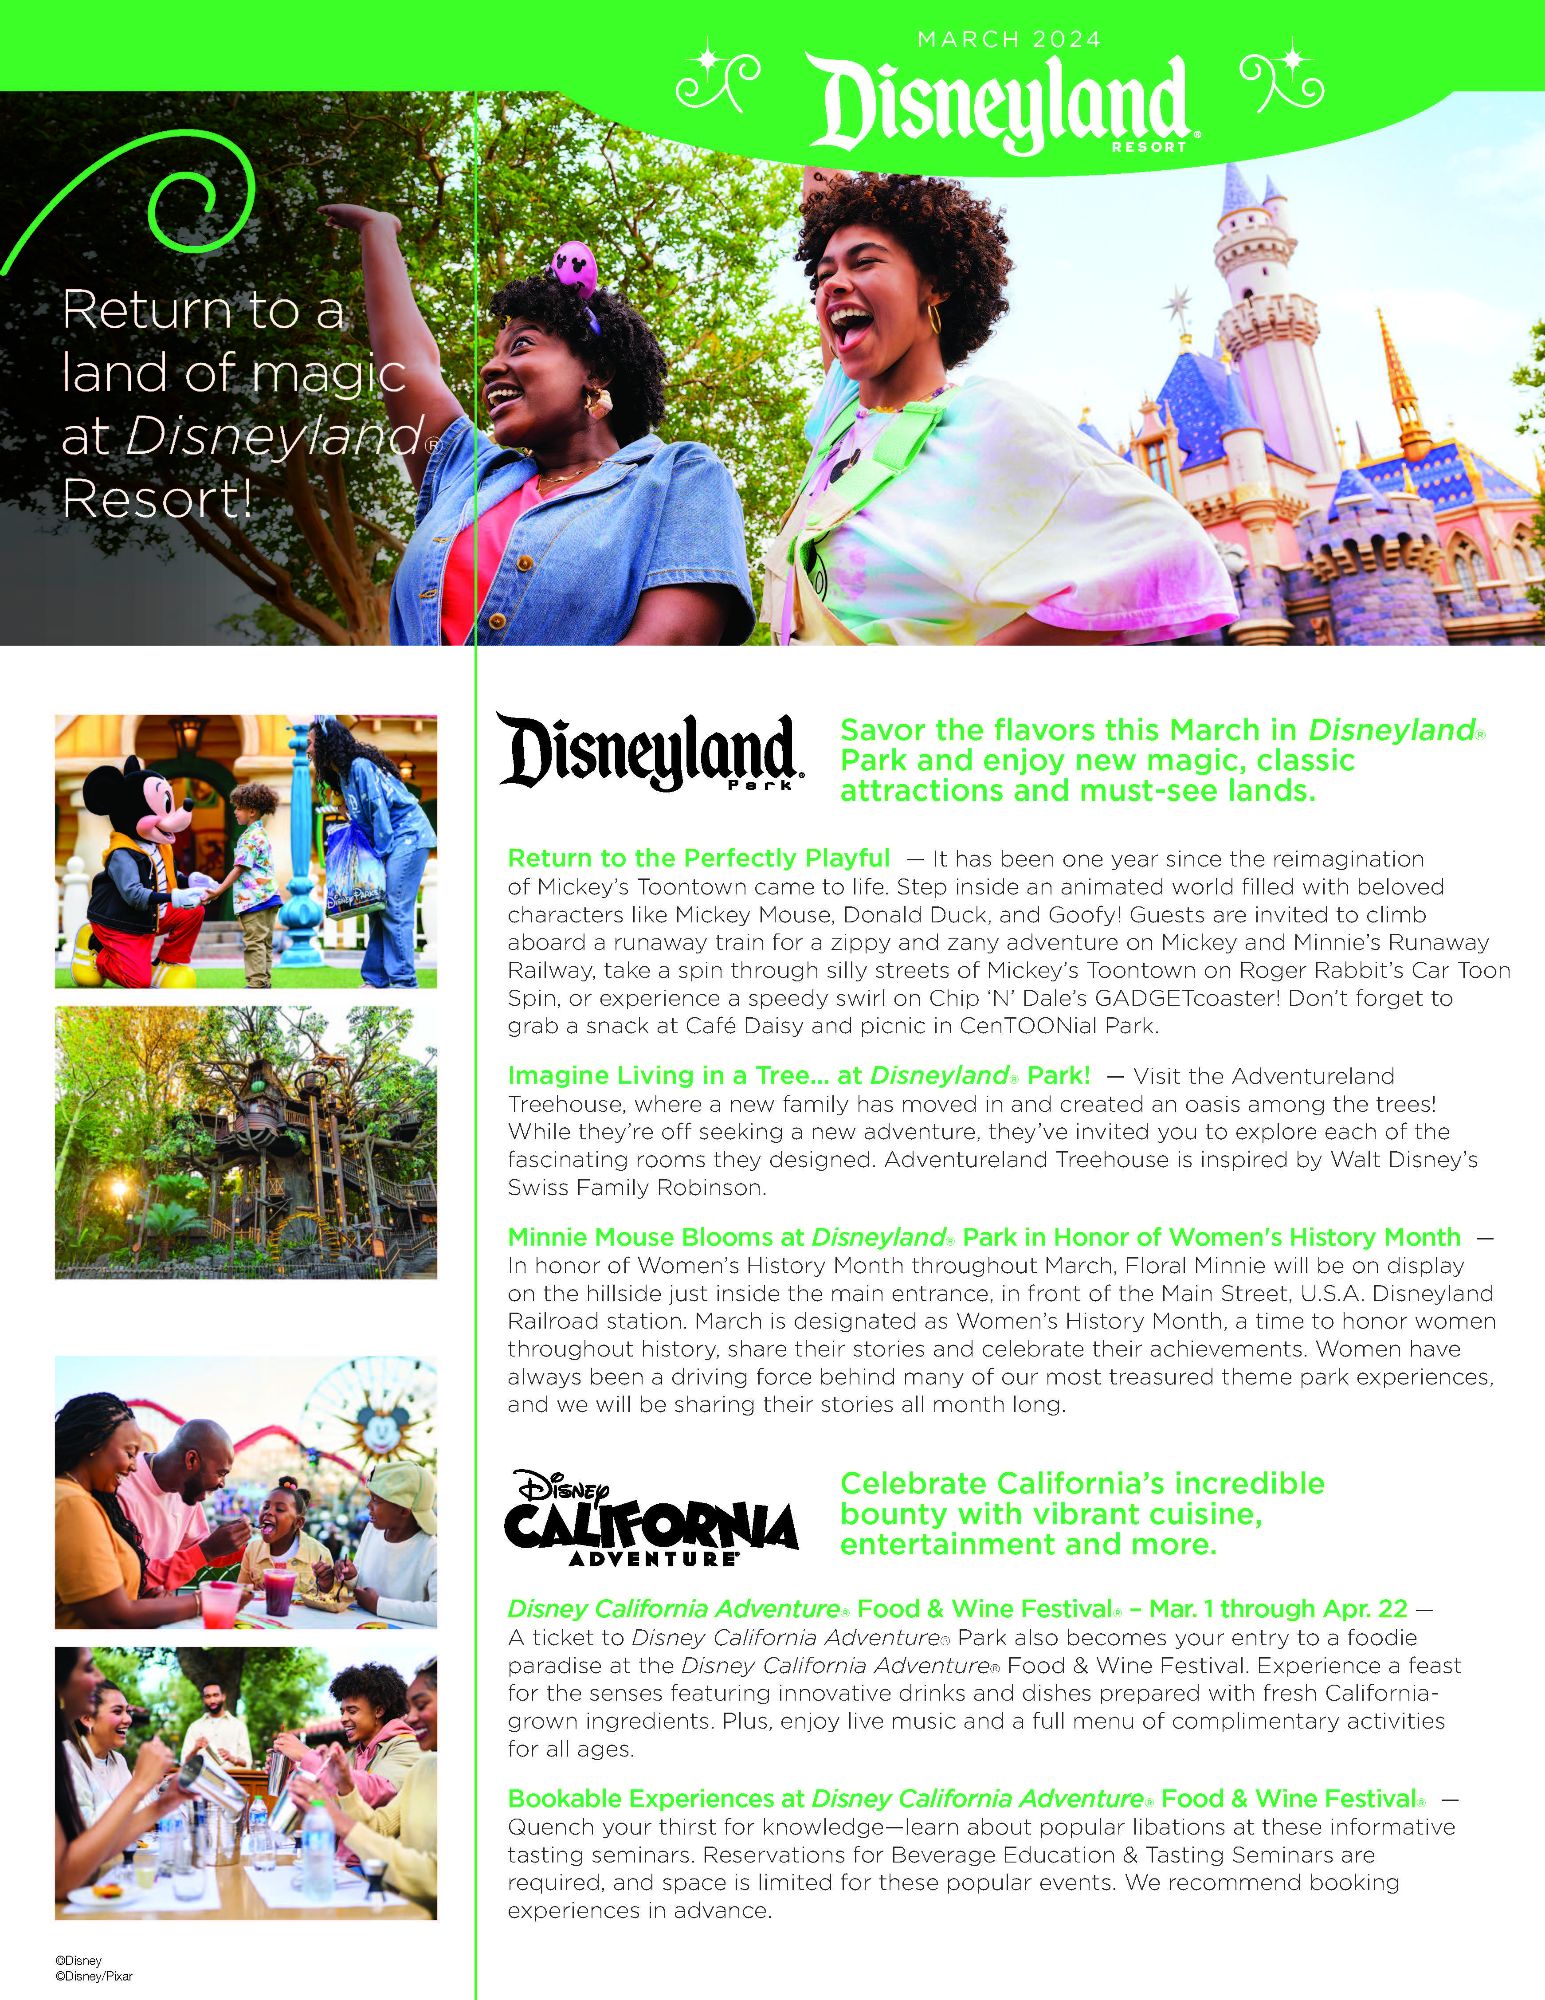 Disneyland March 2024 Flyer_Page_1.jpg